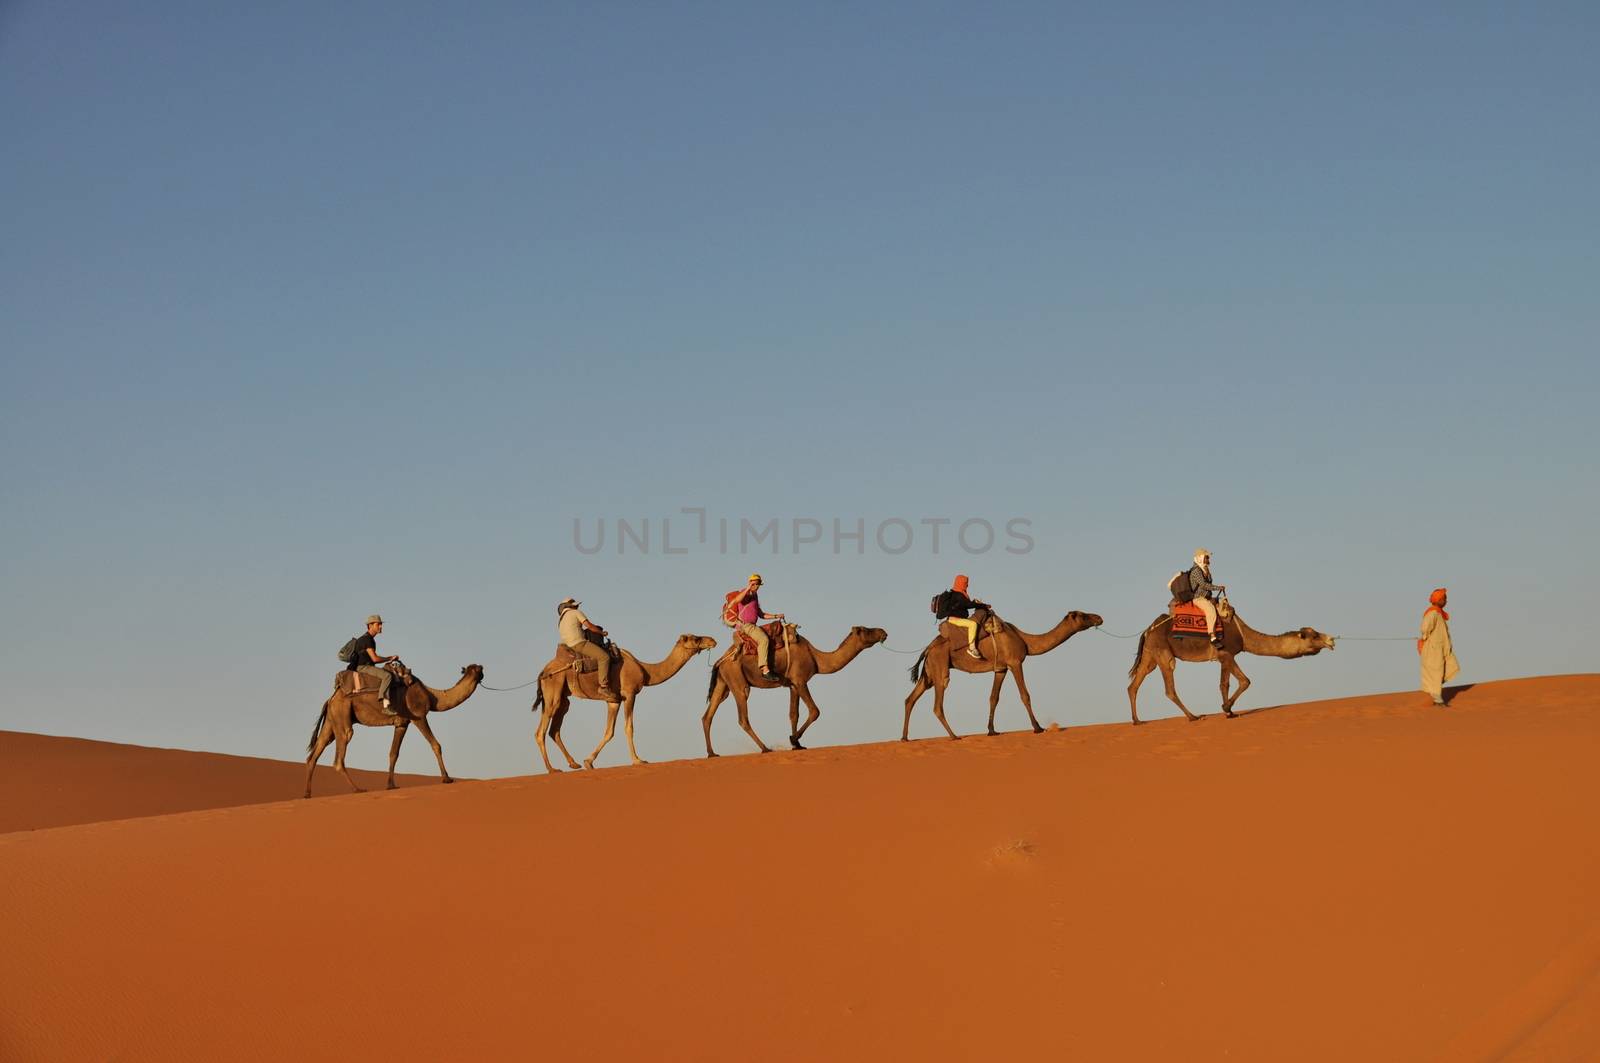 MERZOUGA DESERT - OCTOBER 01: Tourists in a camel caravan in Merzouga Desert, Morocco on October 01, 2013.